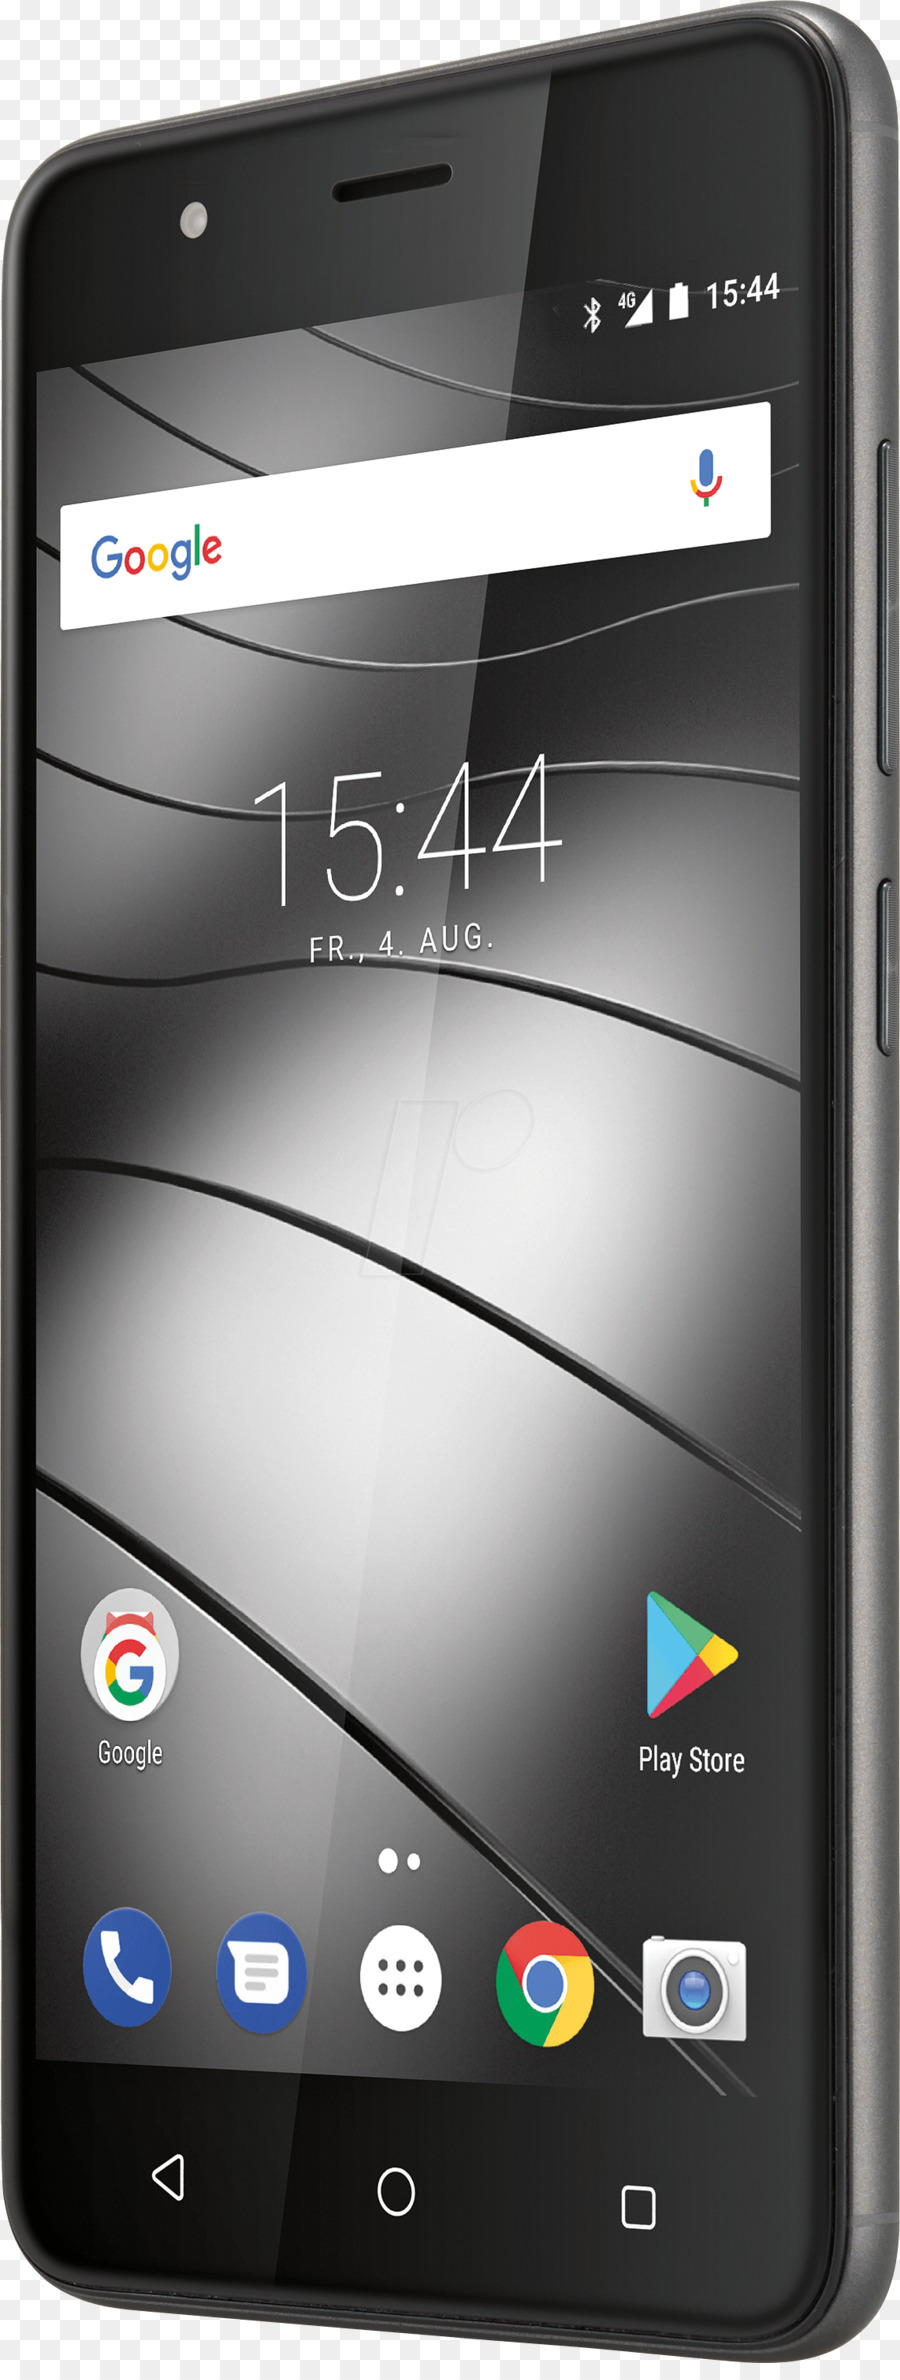 Gigaset GS170 LTE smartphone (12,7 cm 1,3 GHz Quad Core 16 GB 13 MPix Android 7.0 Nougat Schwarz Telefon MediaTek - Smartphone